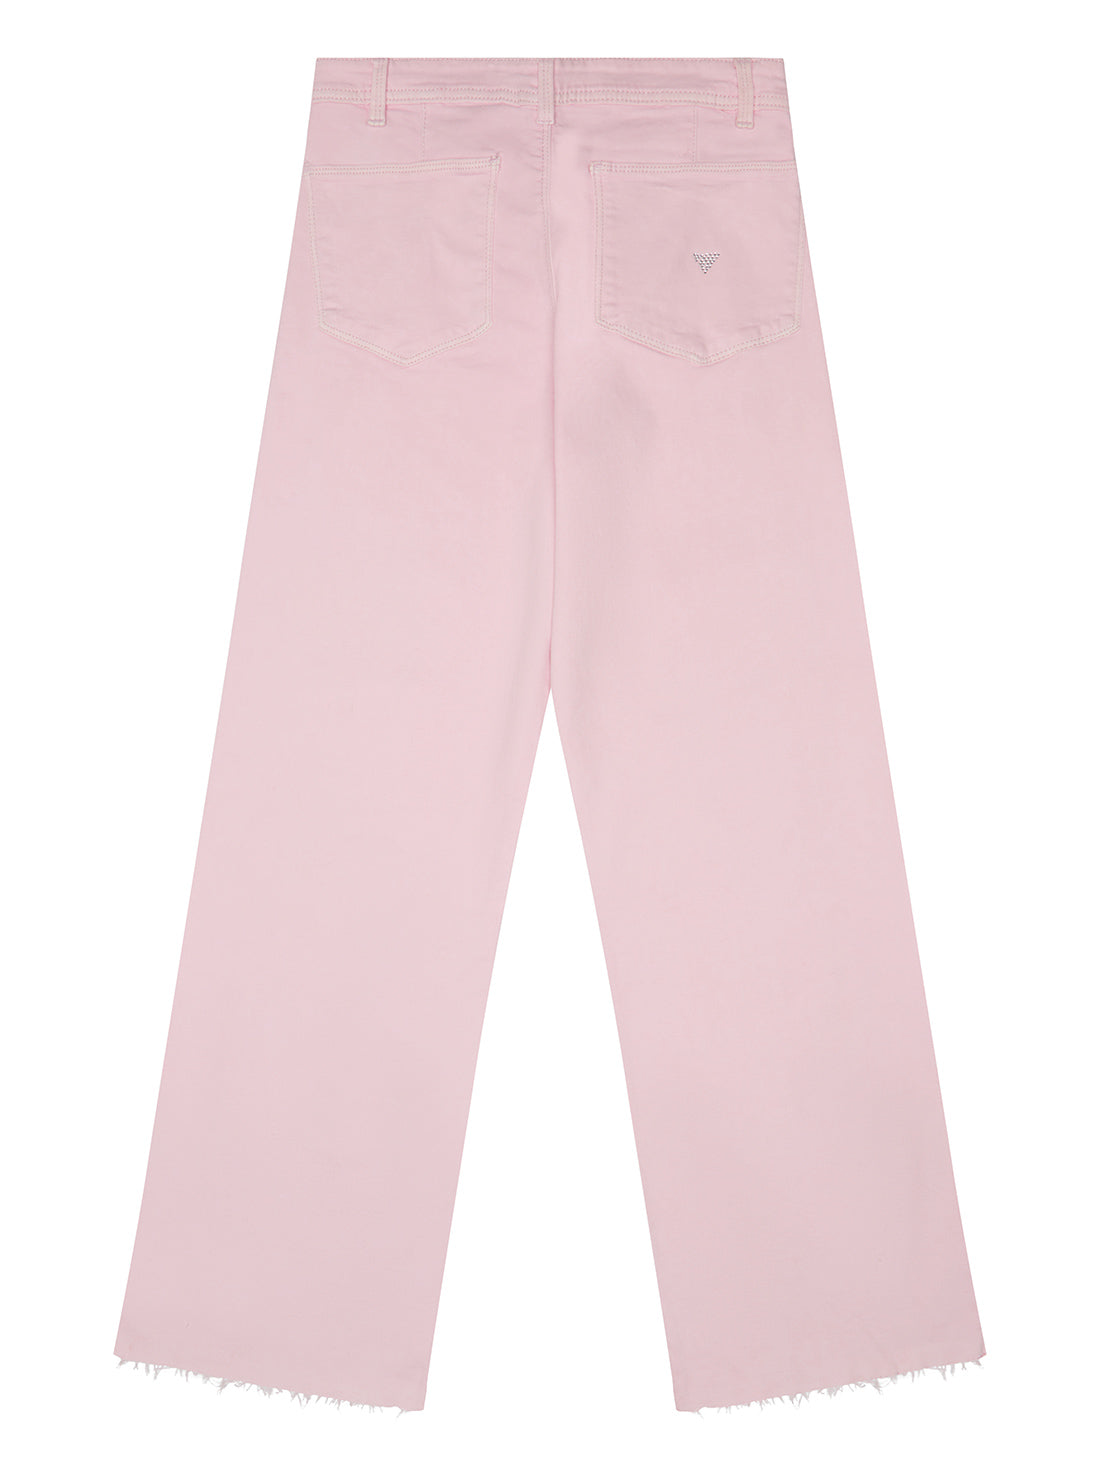 GUESS Pink Bull Denim Culotte Pants (7-16) back view